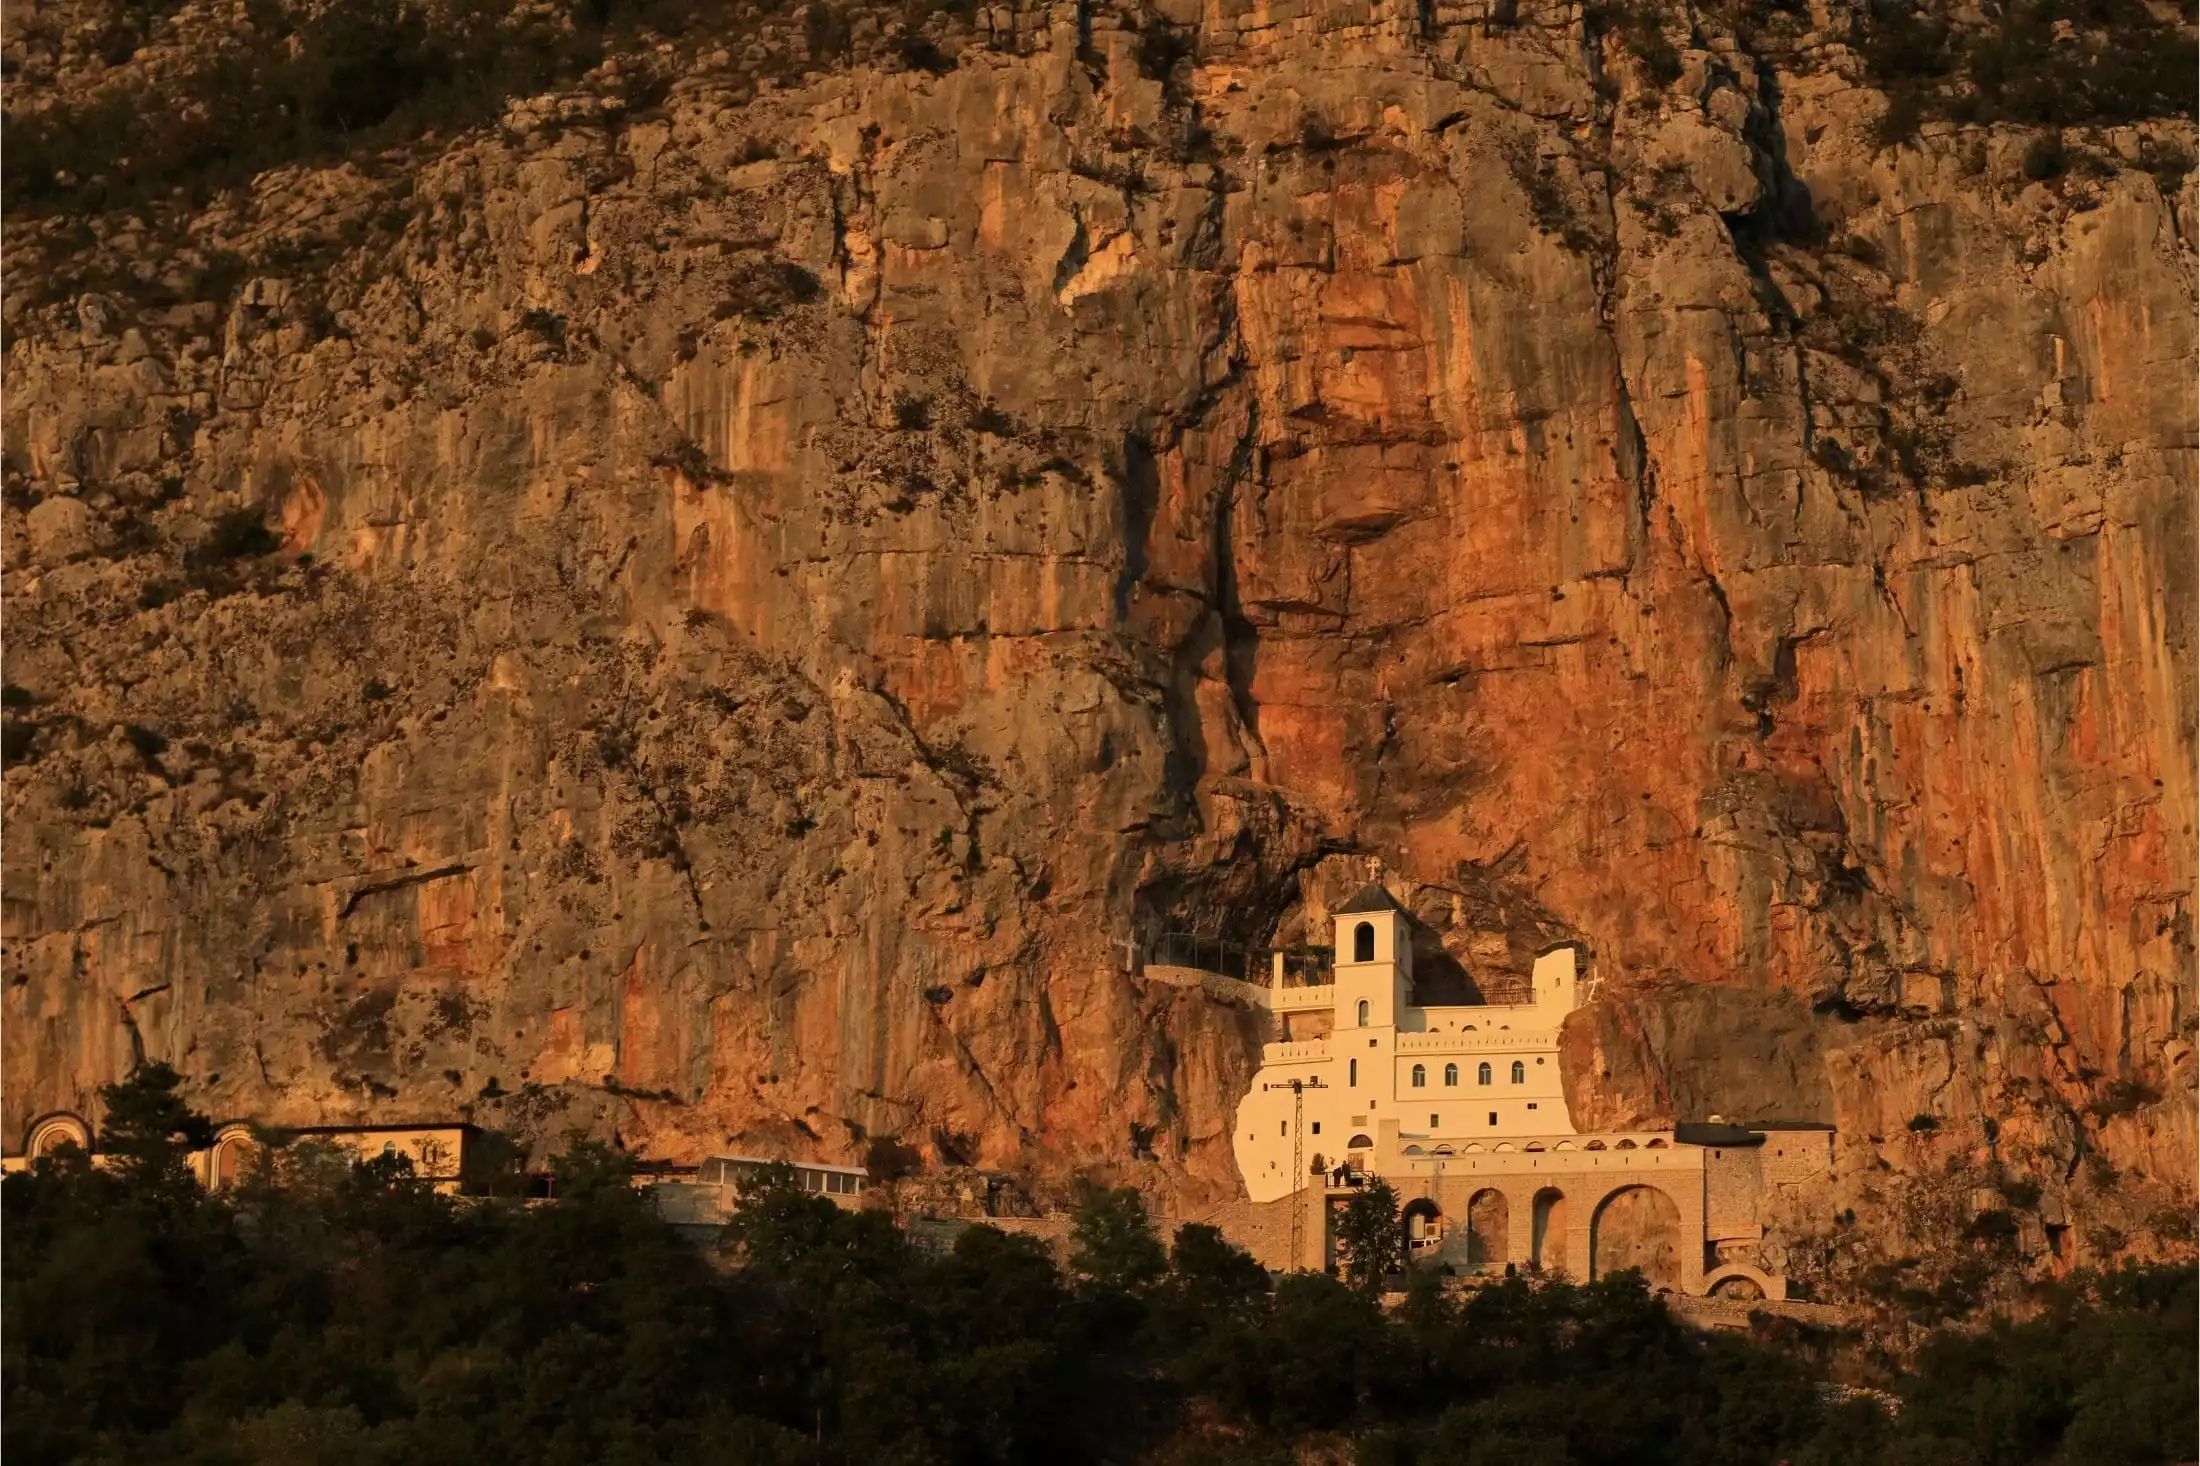 Ostrog Monastery tucked inside a cliff